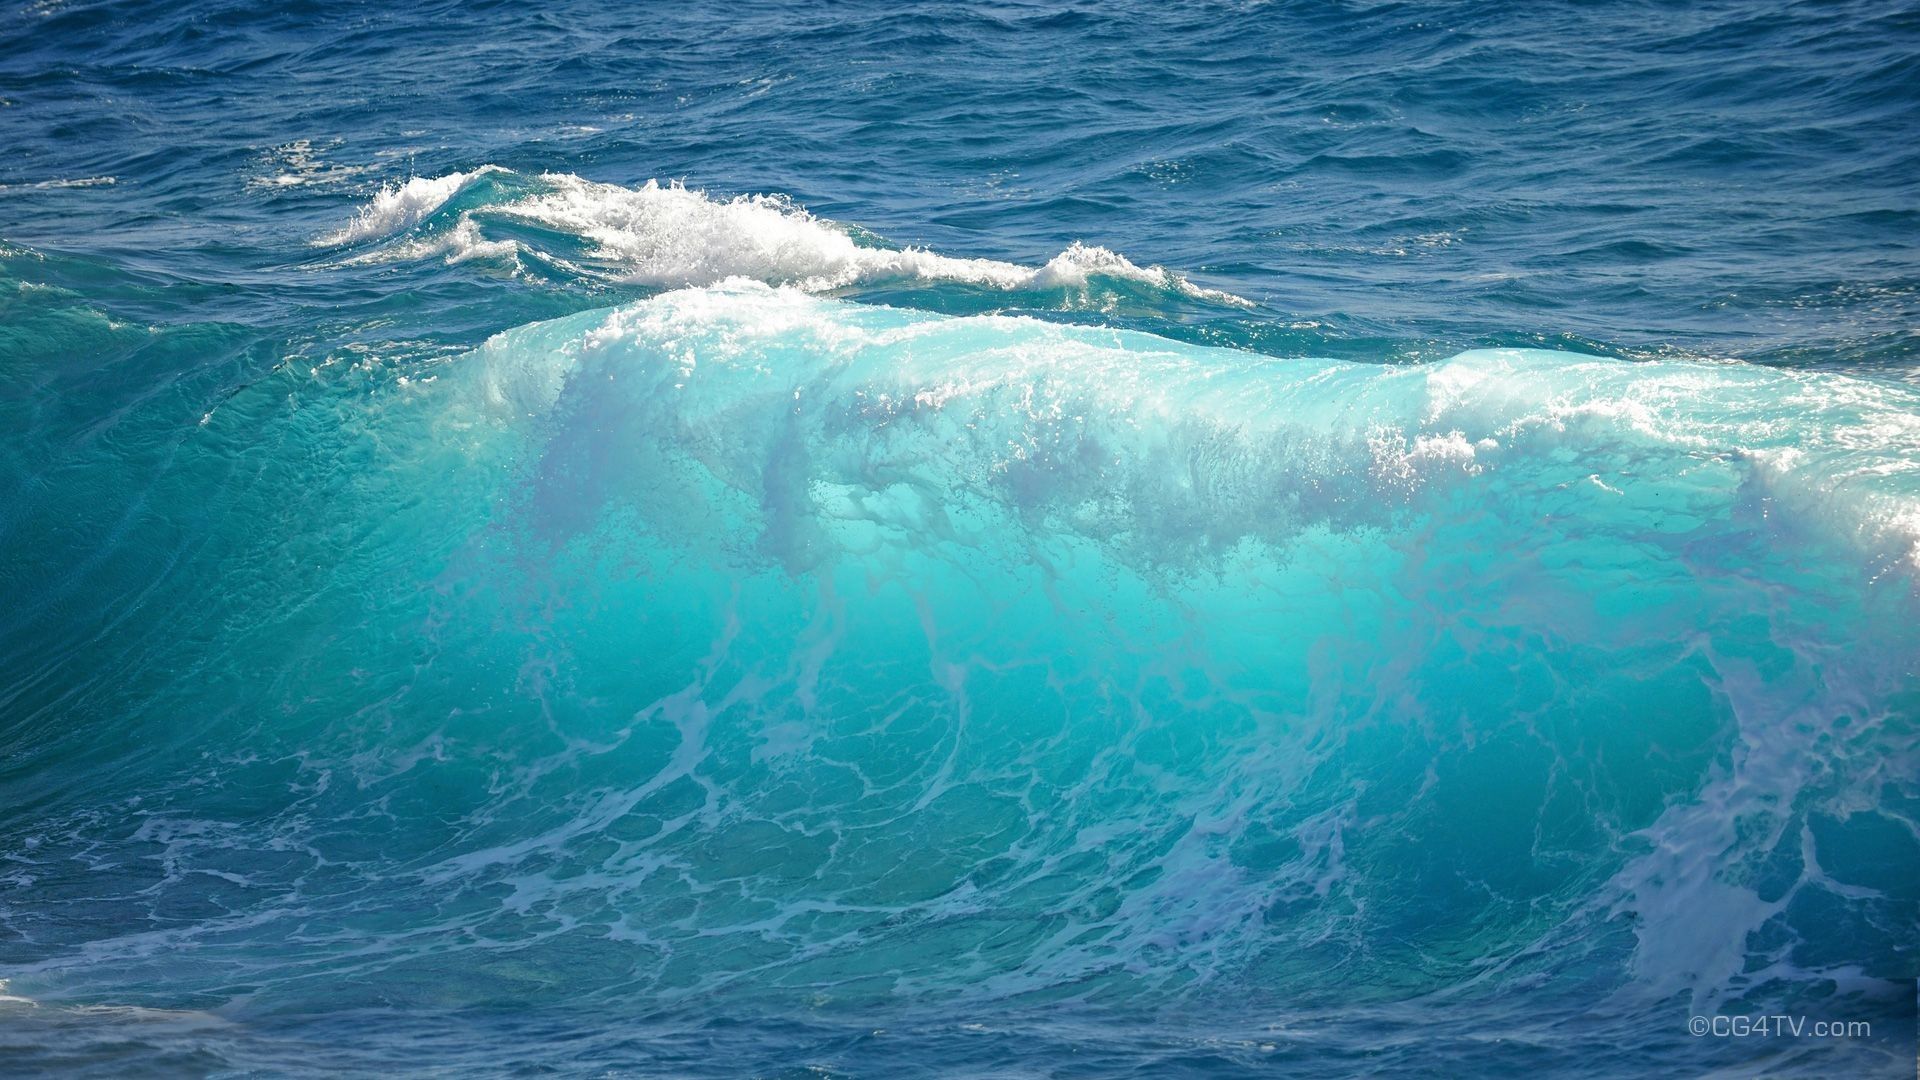 A large wave in the ocean - Ocean